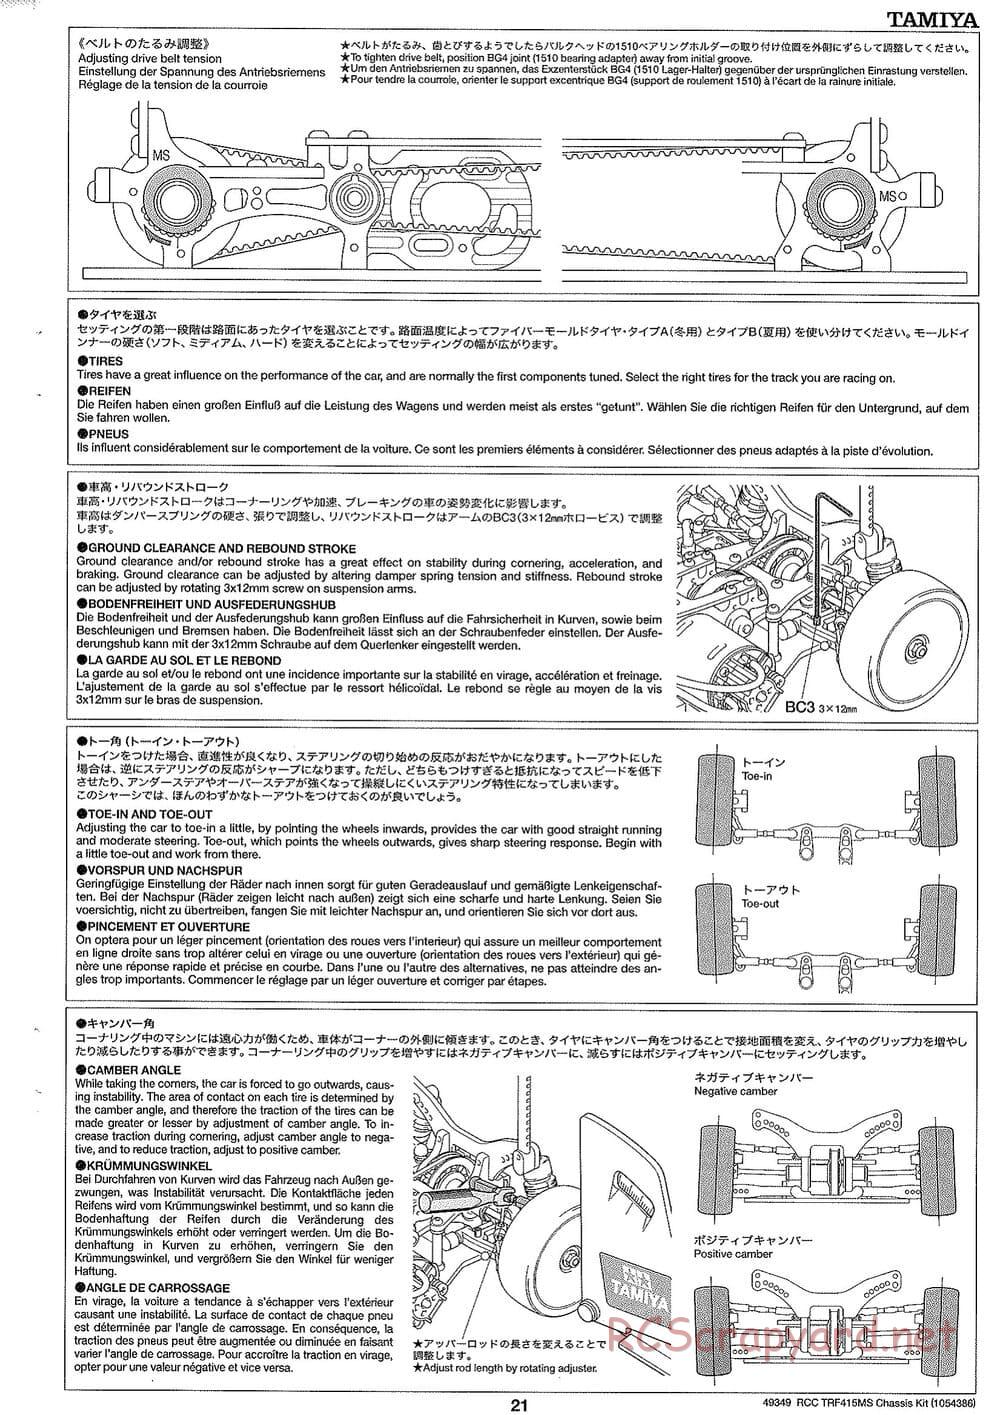 Tamiya - TRF415-MS Chassis - Manual - Page 21